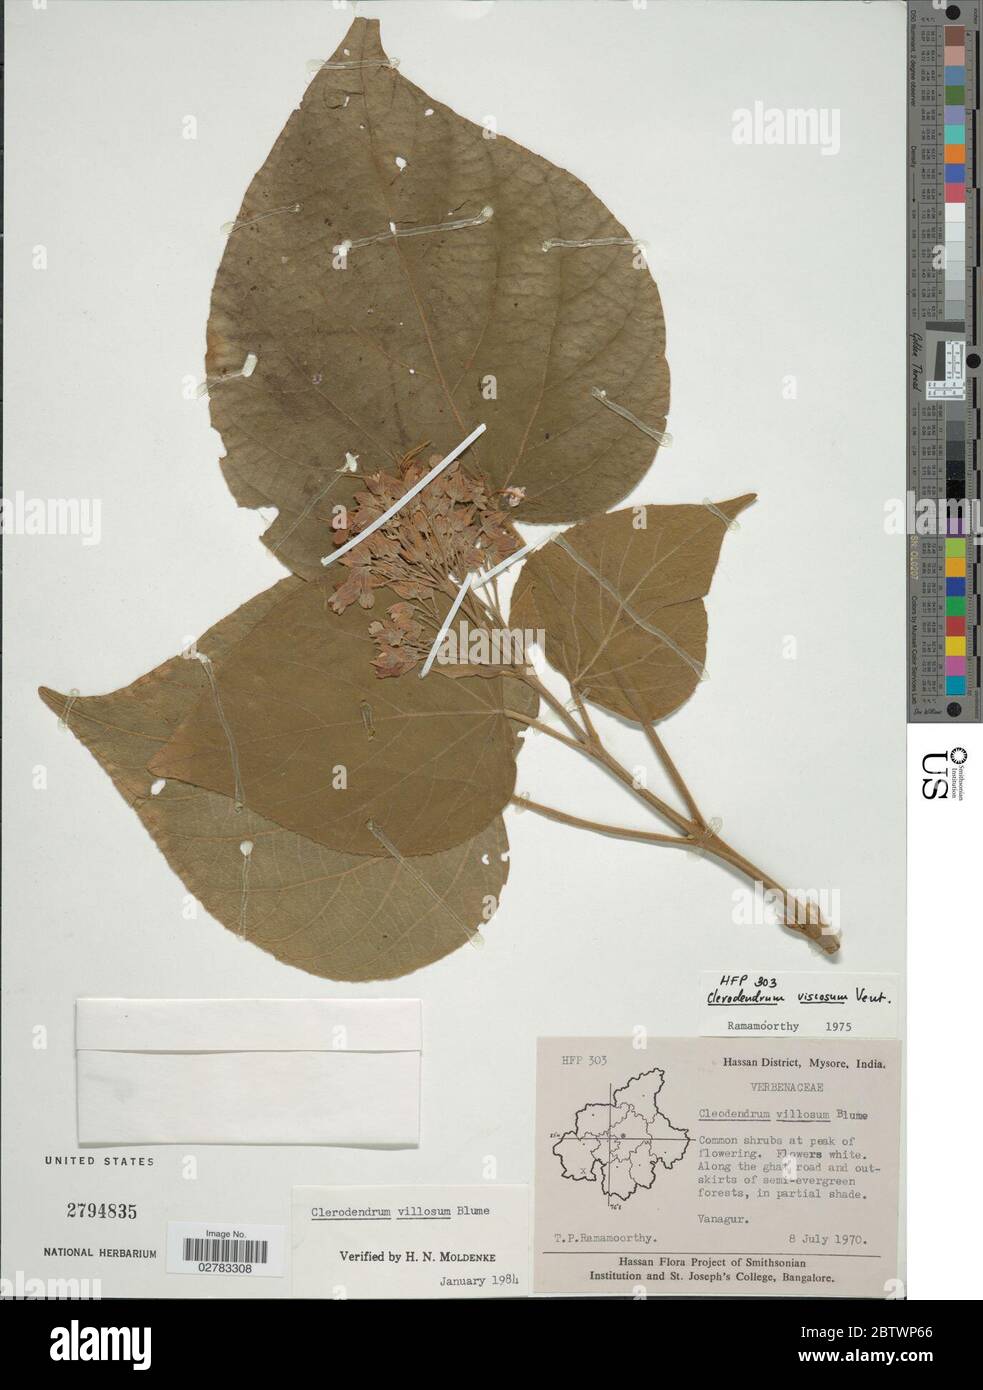 Clerodendrum villosum Blume. Stock Photo